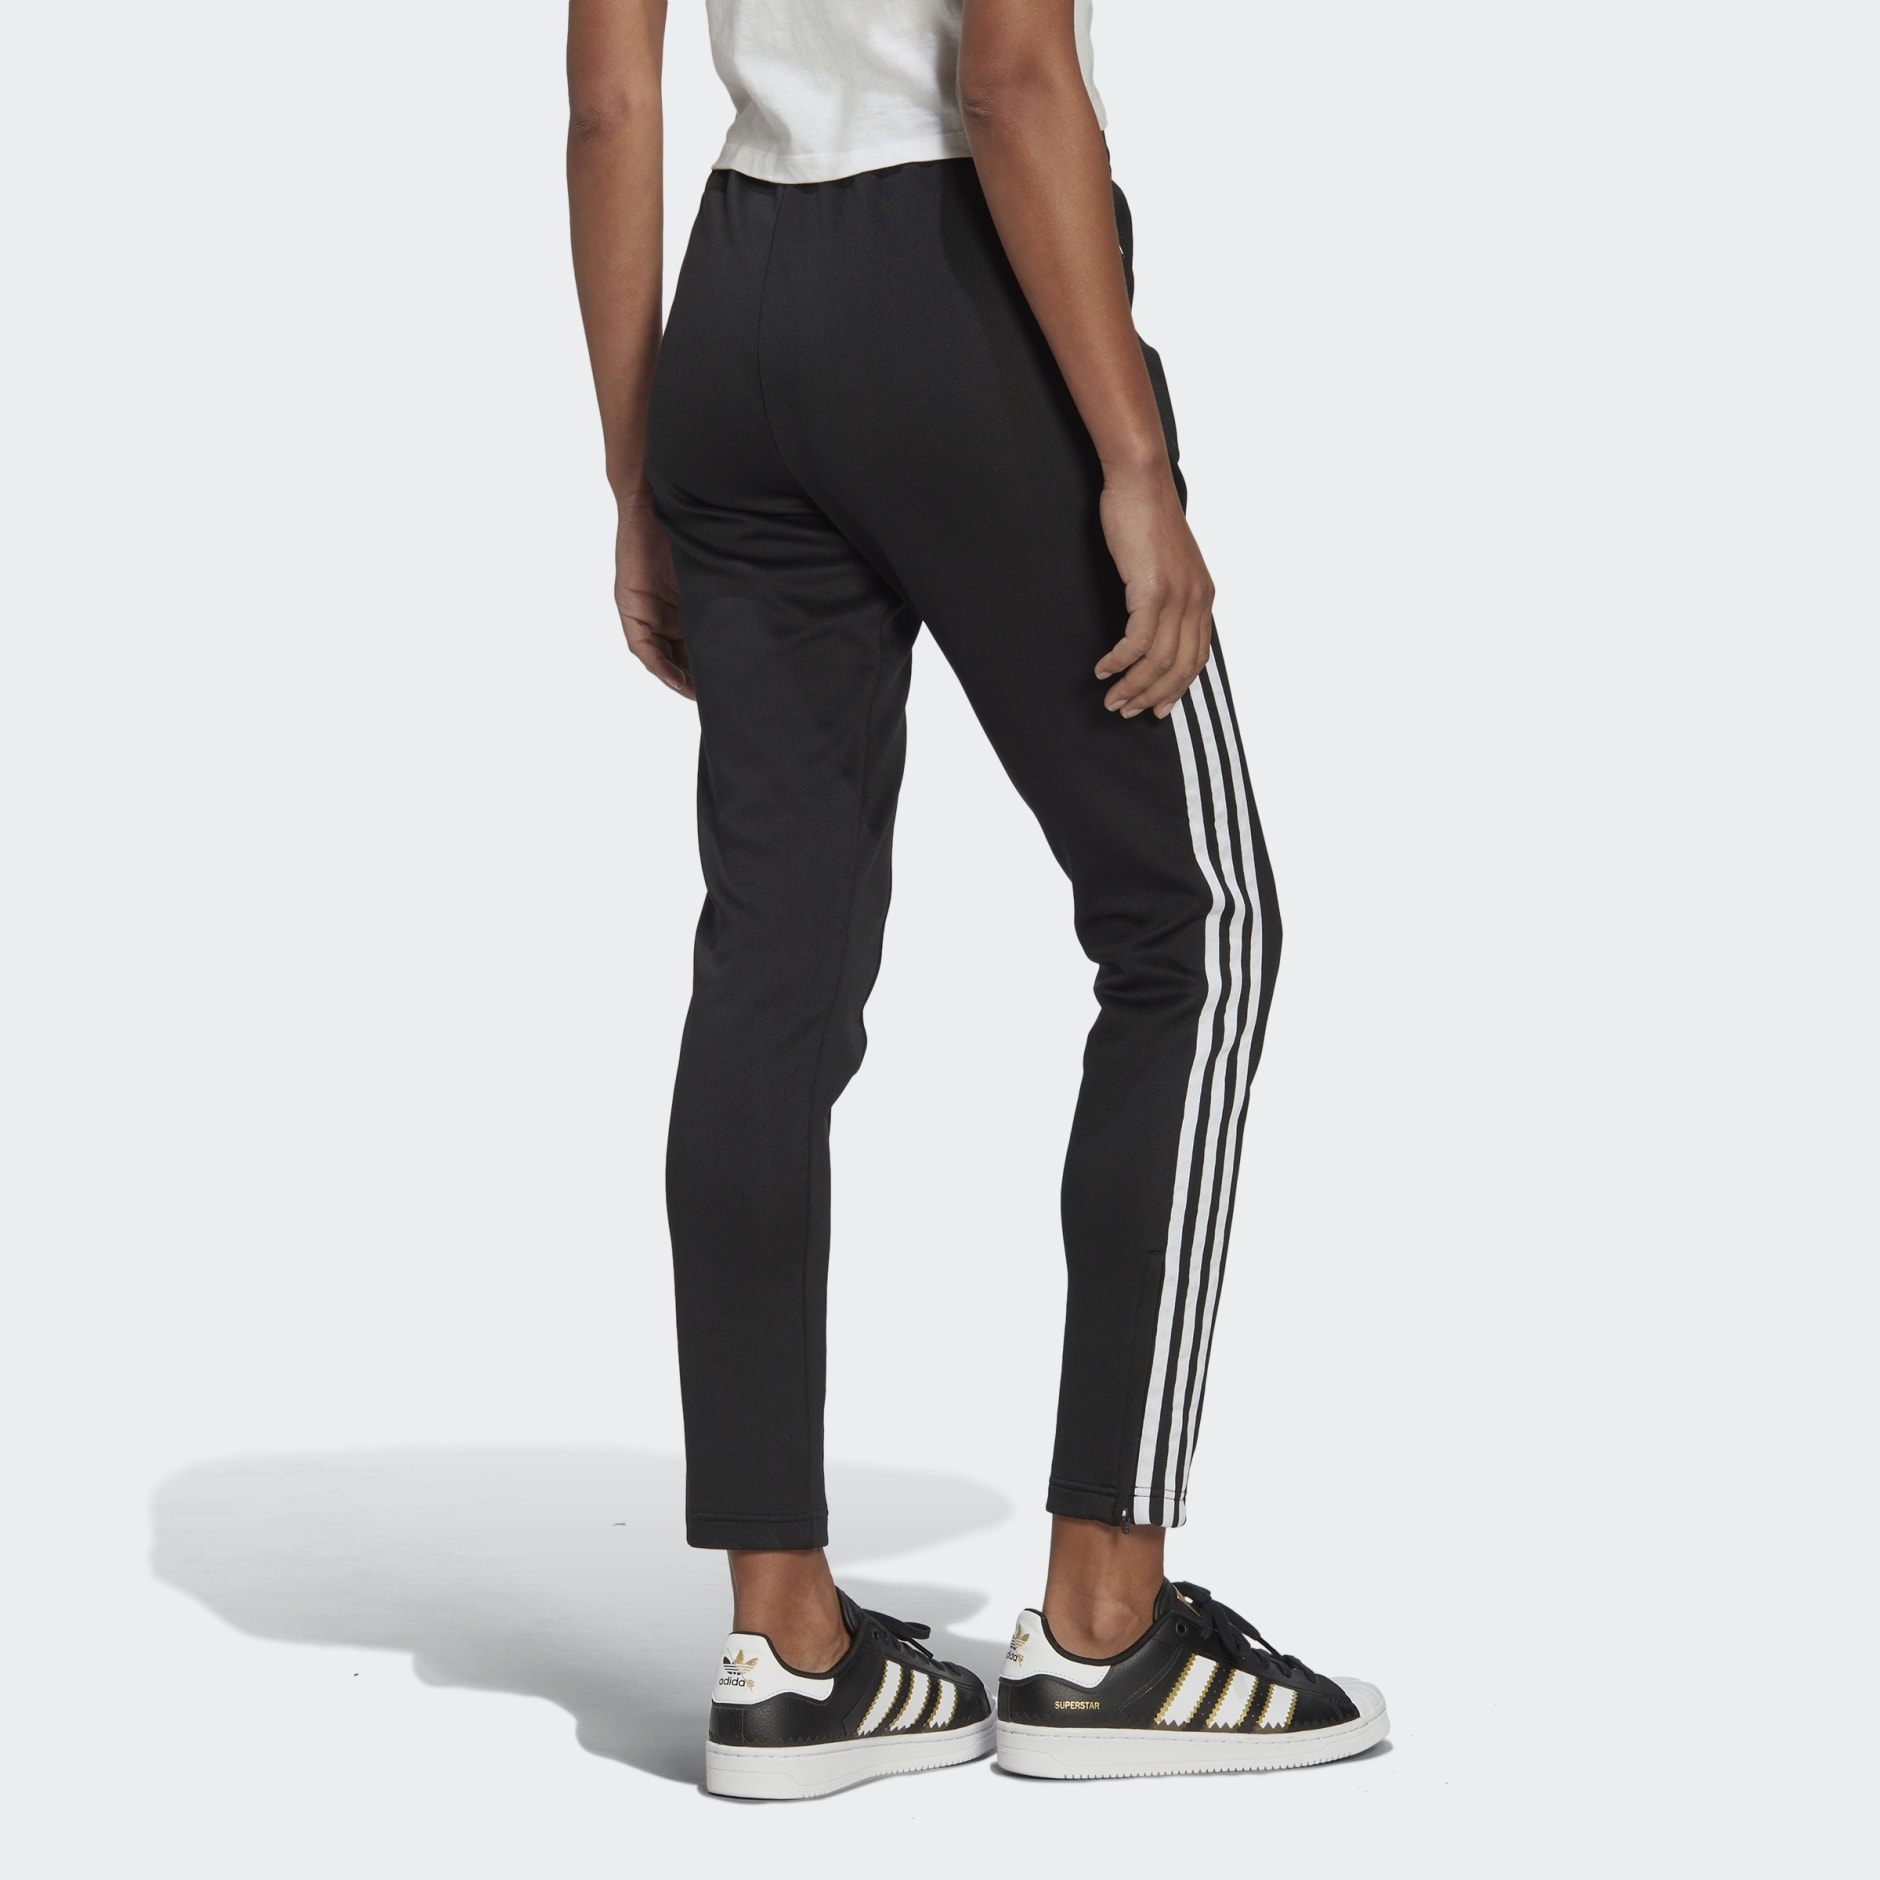 Buy adidas Originals Womens Primeblue Superstar Track Pants plus Size  BlackWhite